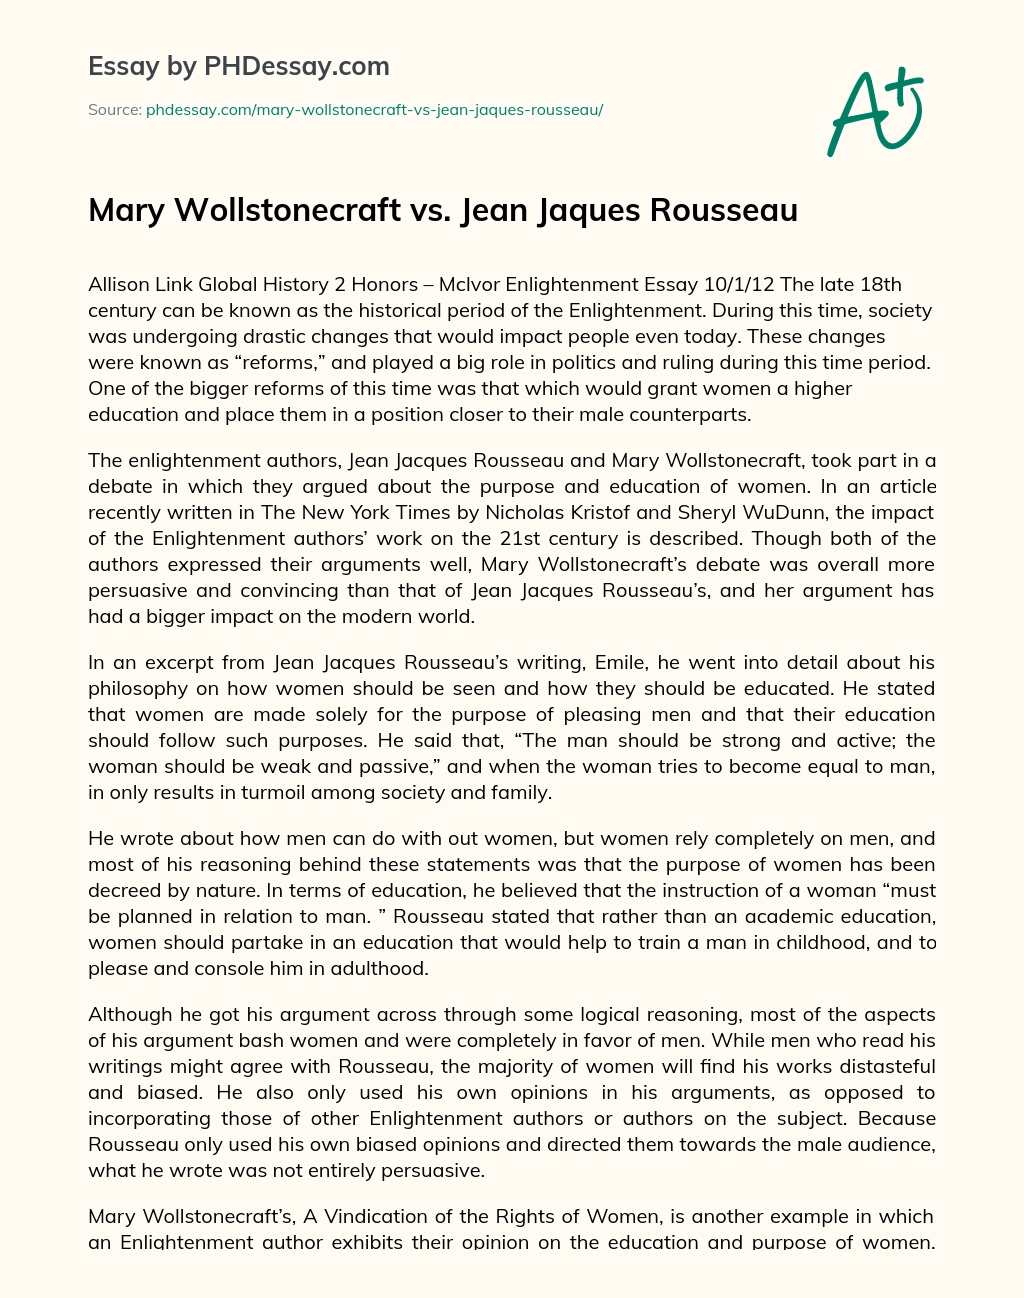 Mary Wollstonecraft vs. Jean Jaques Rousseau essay